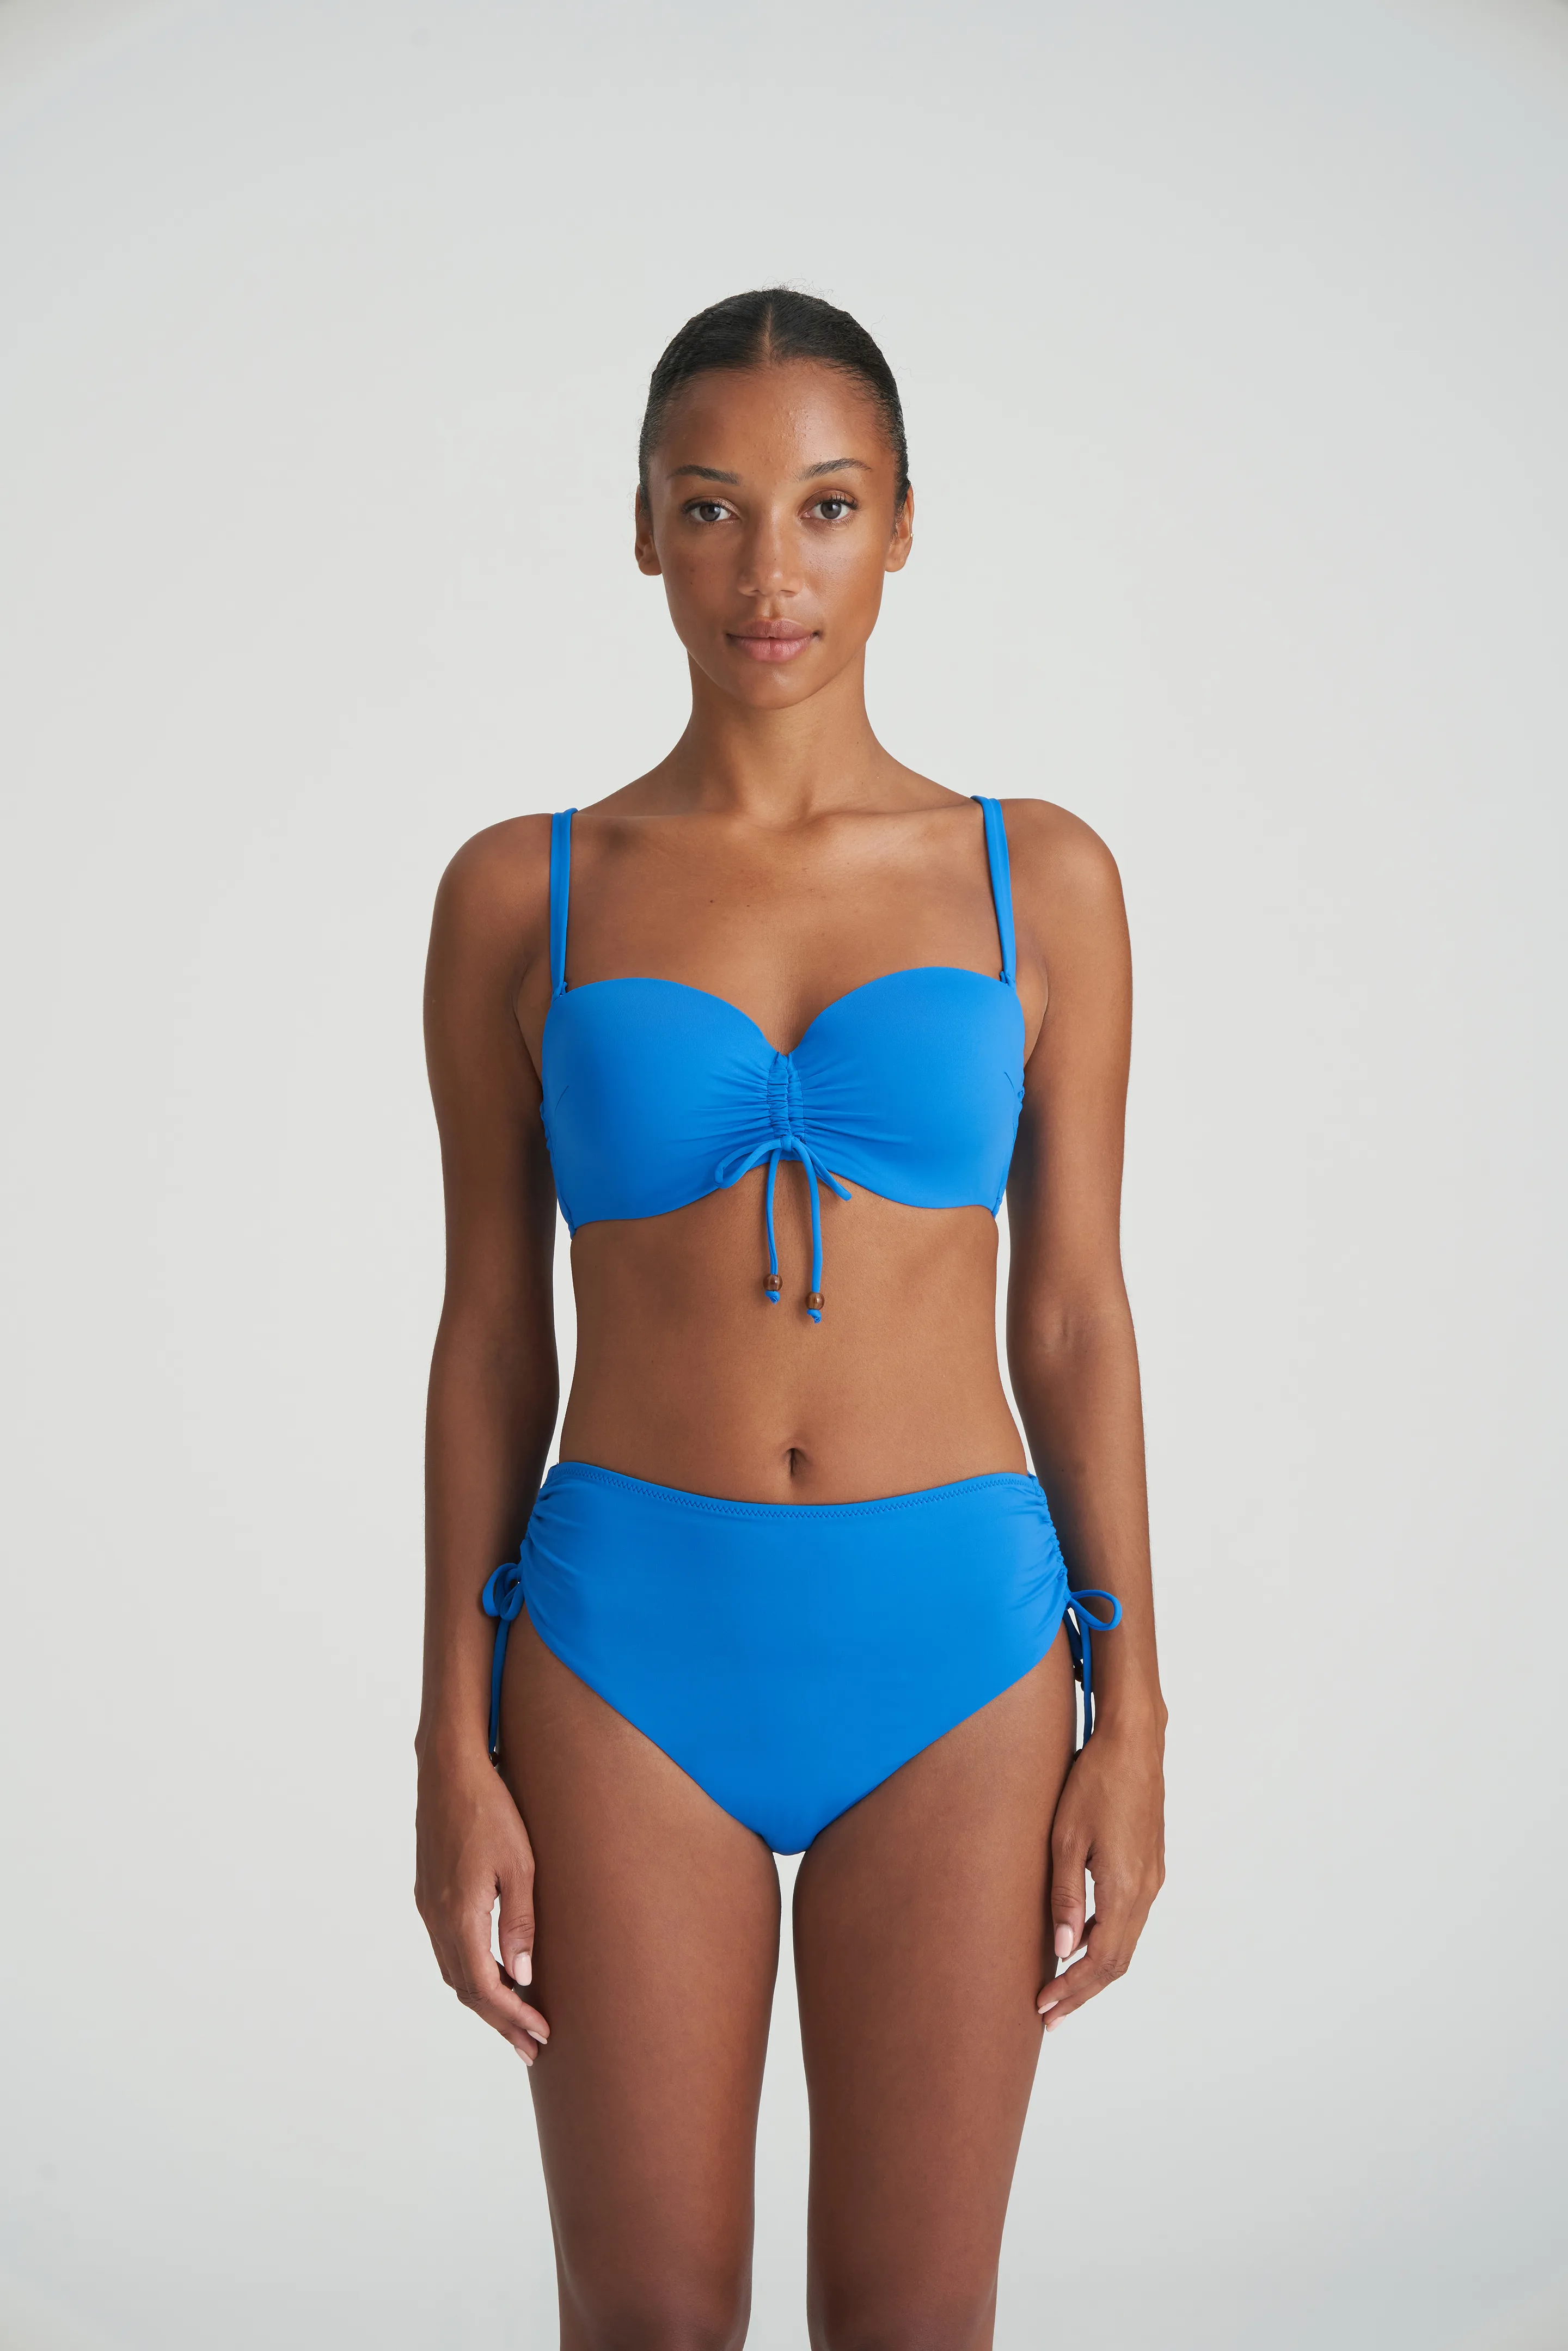 Marie Jo Swim LA GOMERA Deep Sea Coral padded strapless bikini top